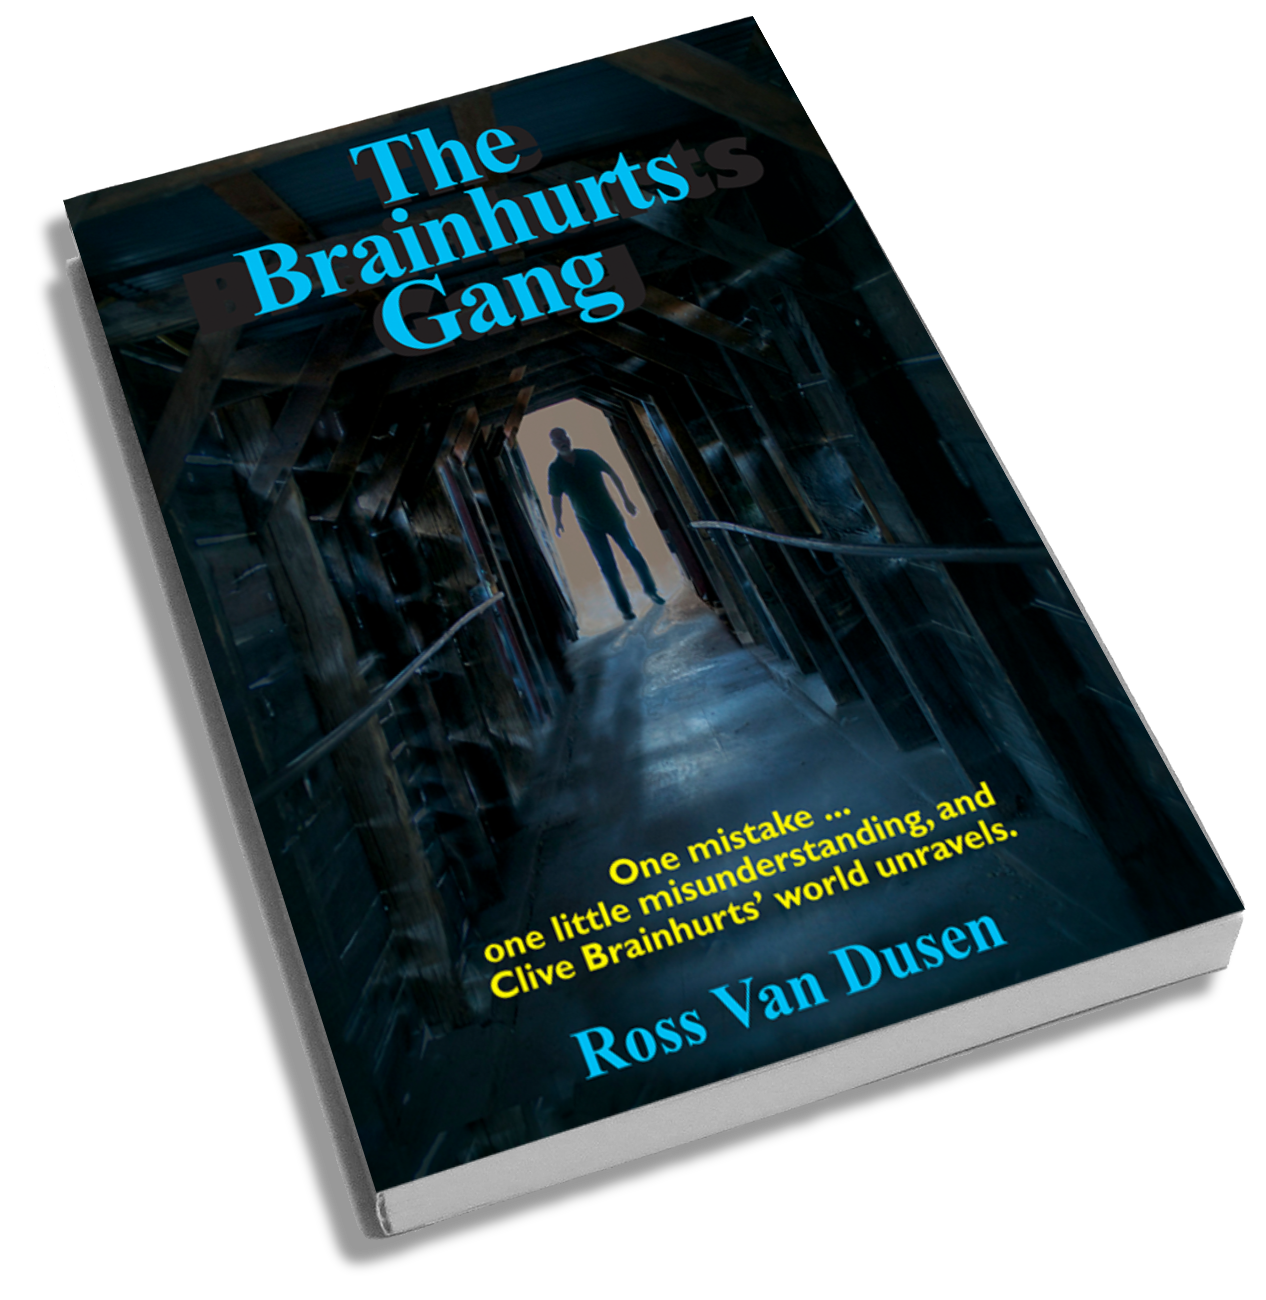 The Brainhurts Gang book